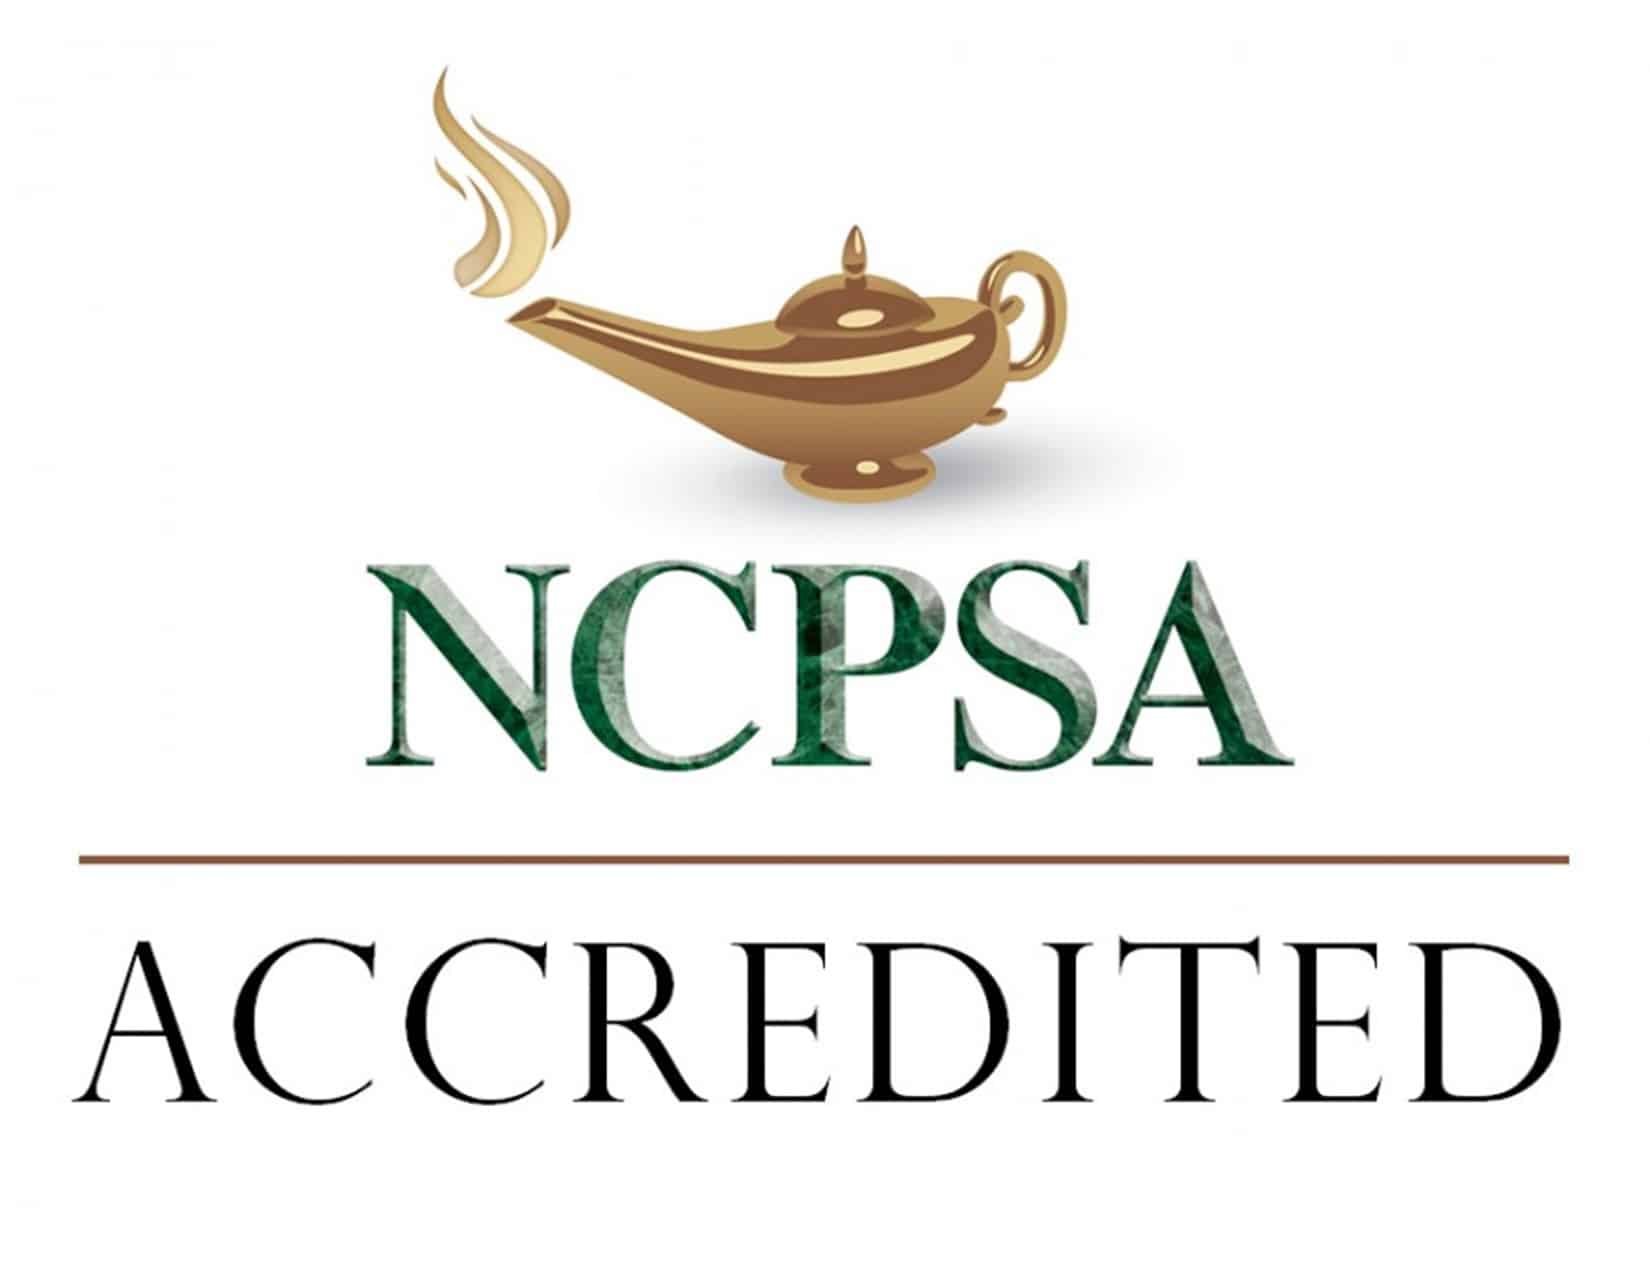 NCPSA Accredited